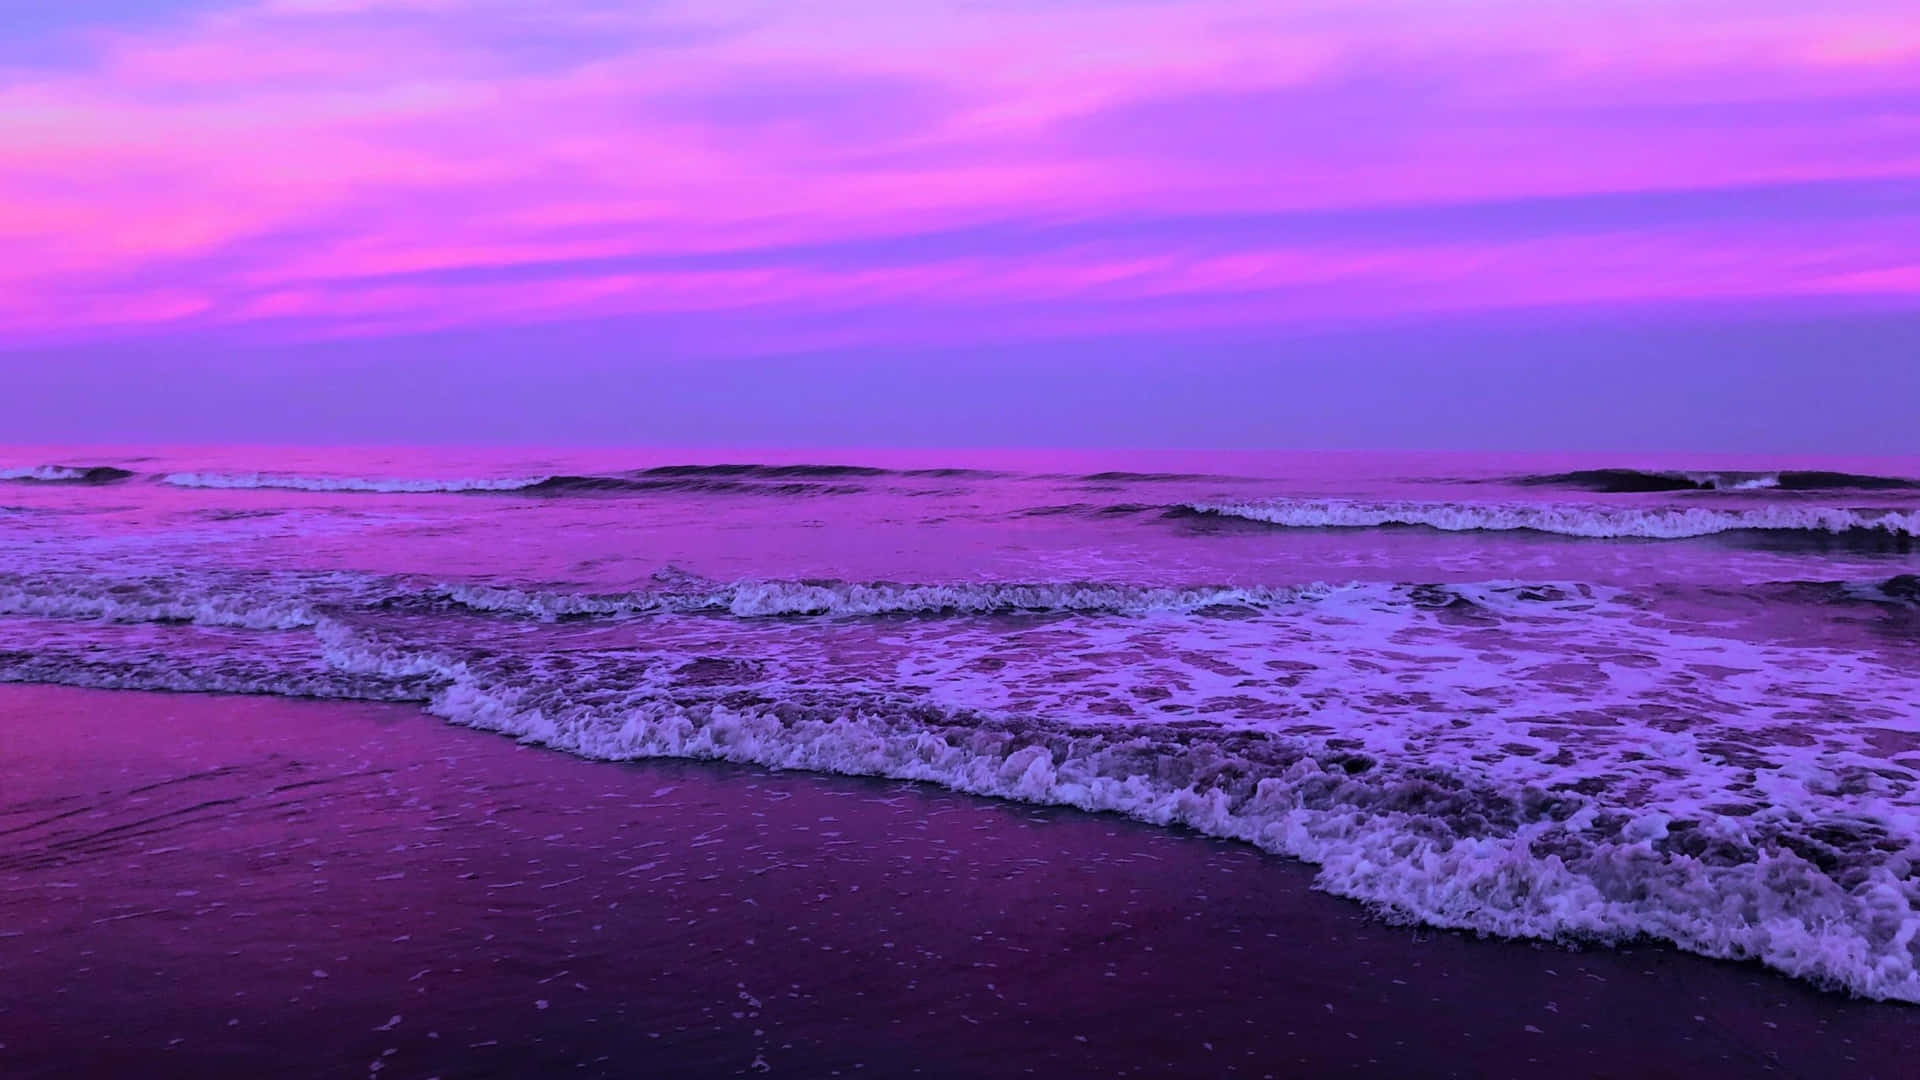 Caption: Serene 4k Image Of Stunning Ocean Waves Wallpaper